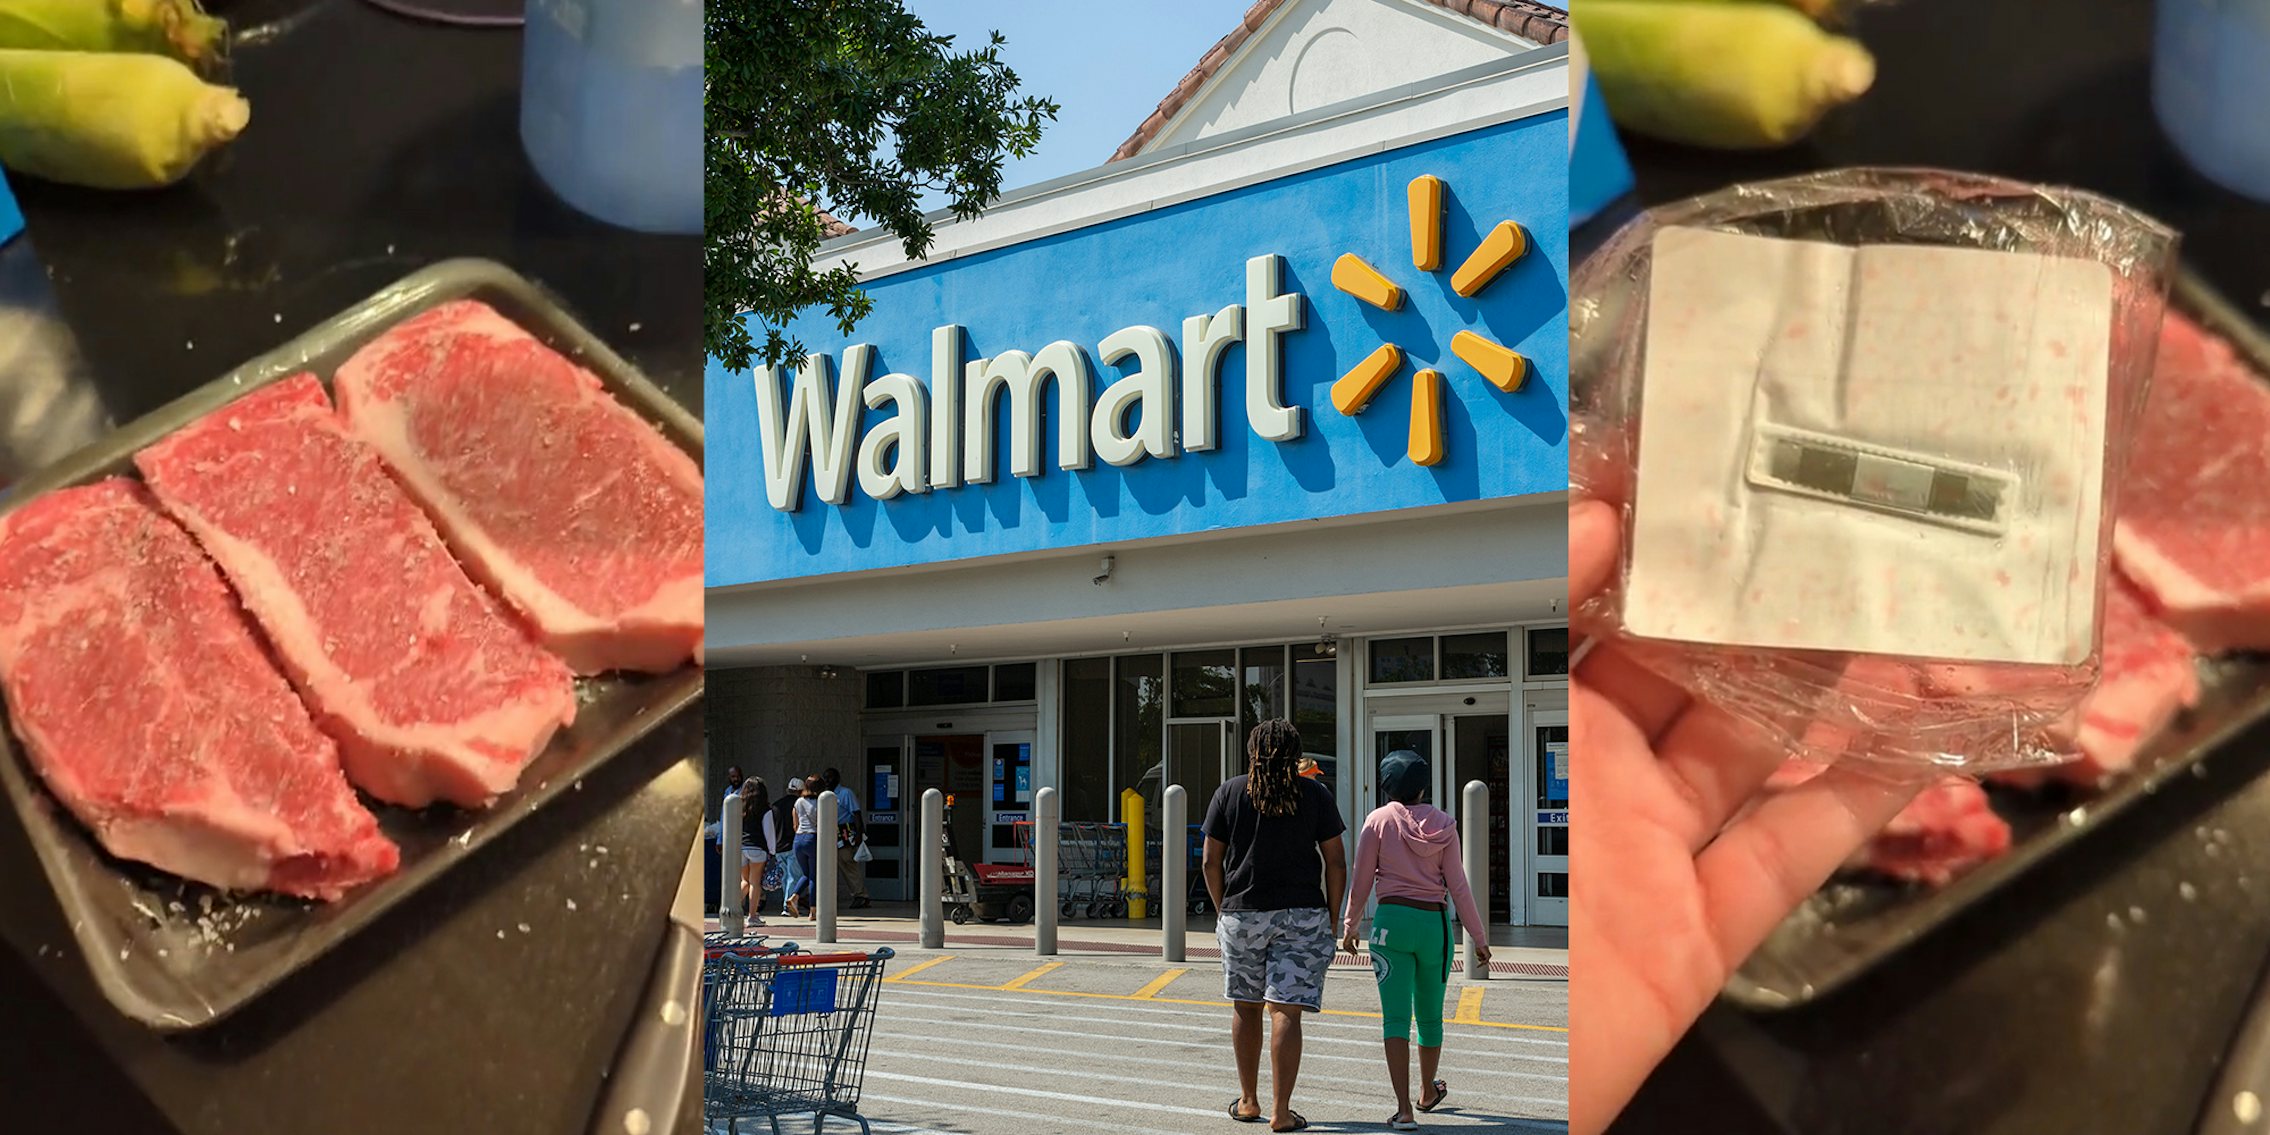 Shopper finds hidden security tag under steak at walmart